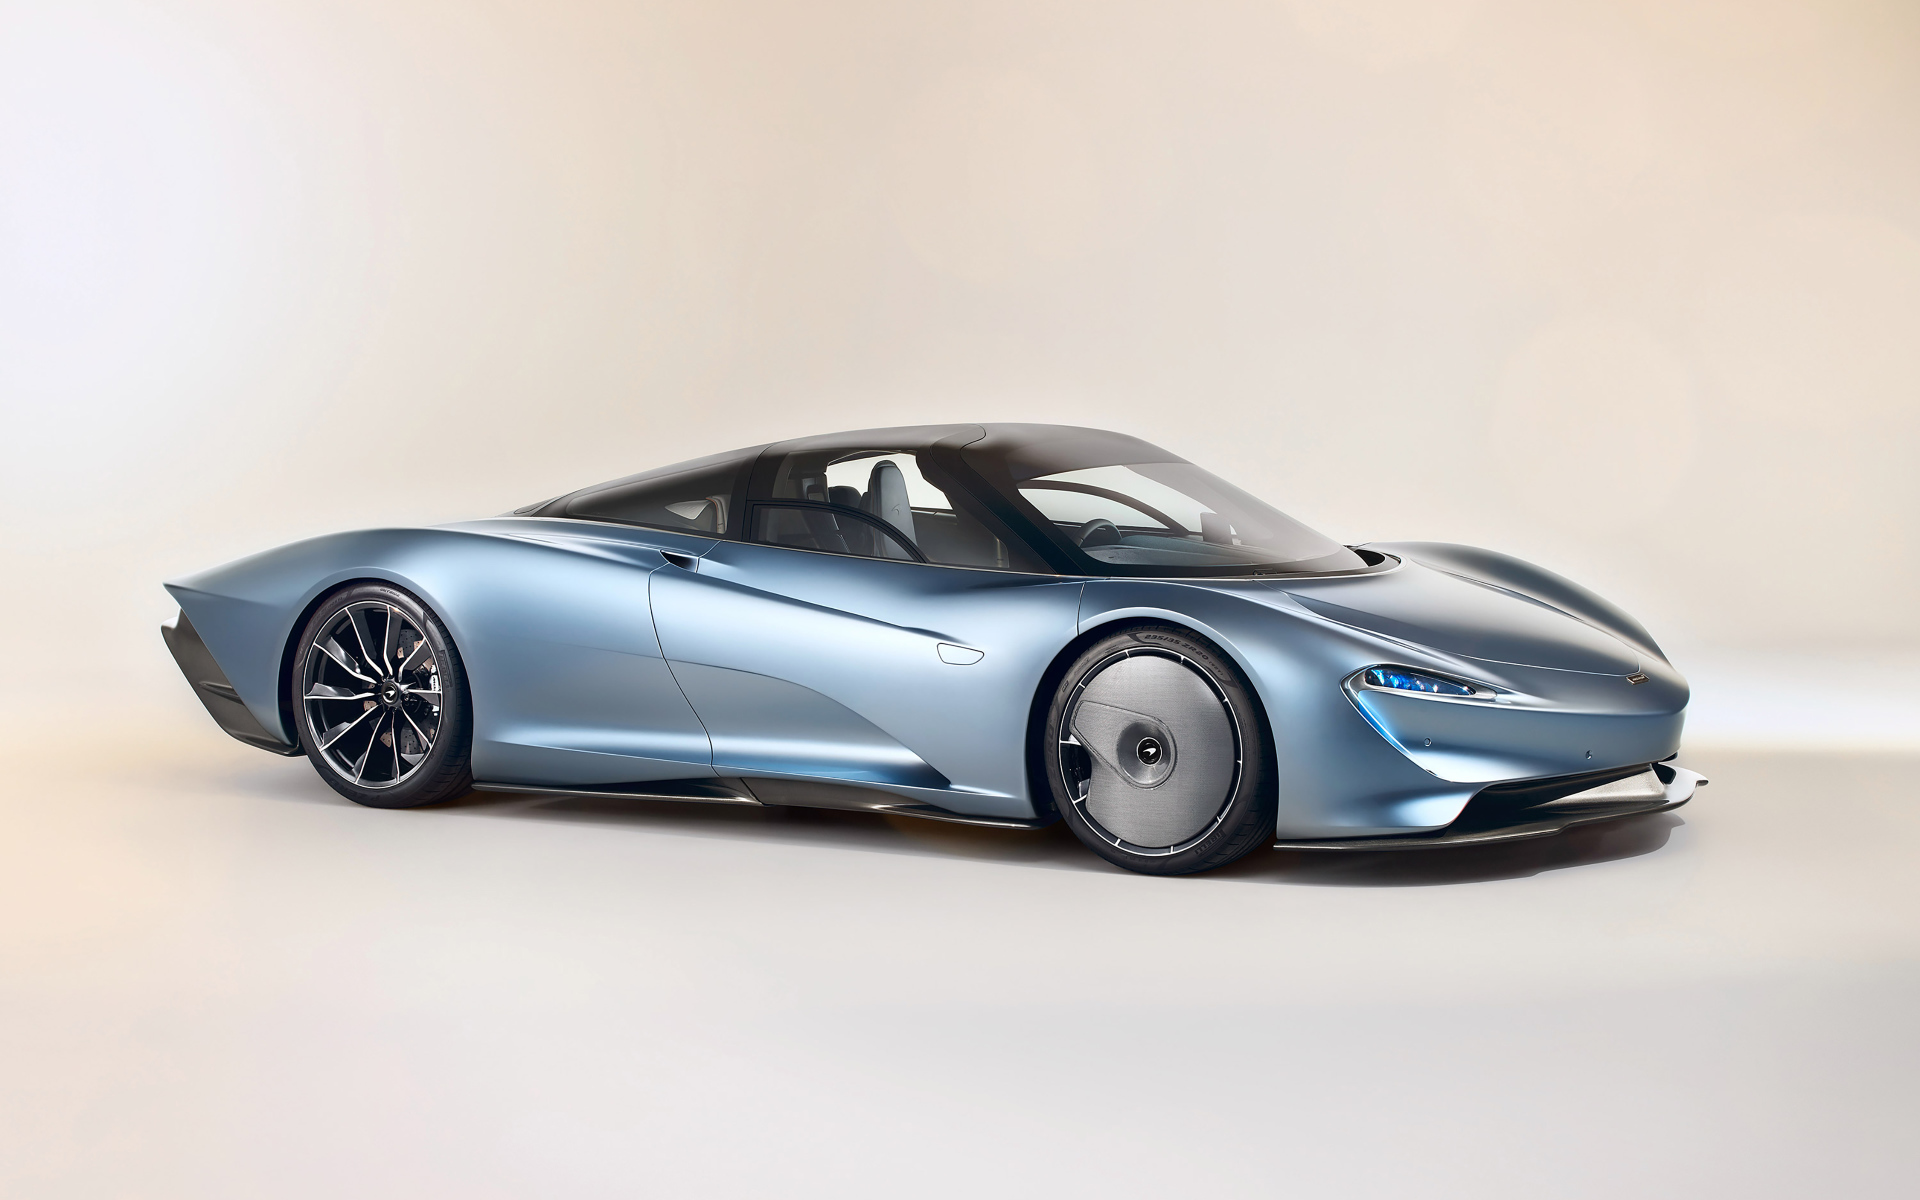 Stylish expensive silver car McLaren Speedtail, 2020